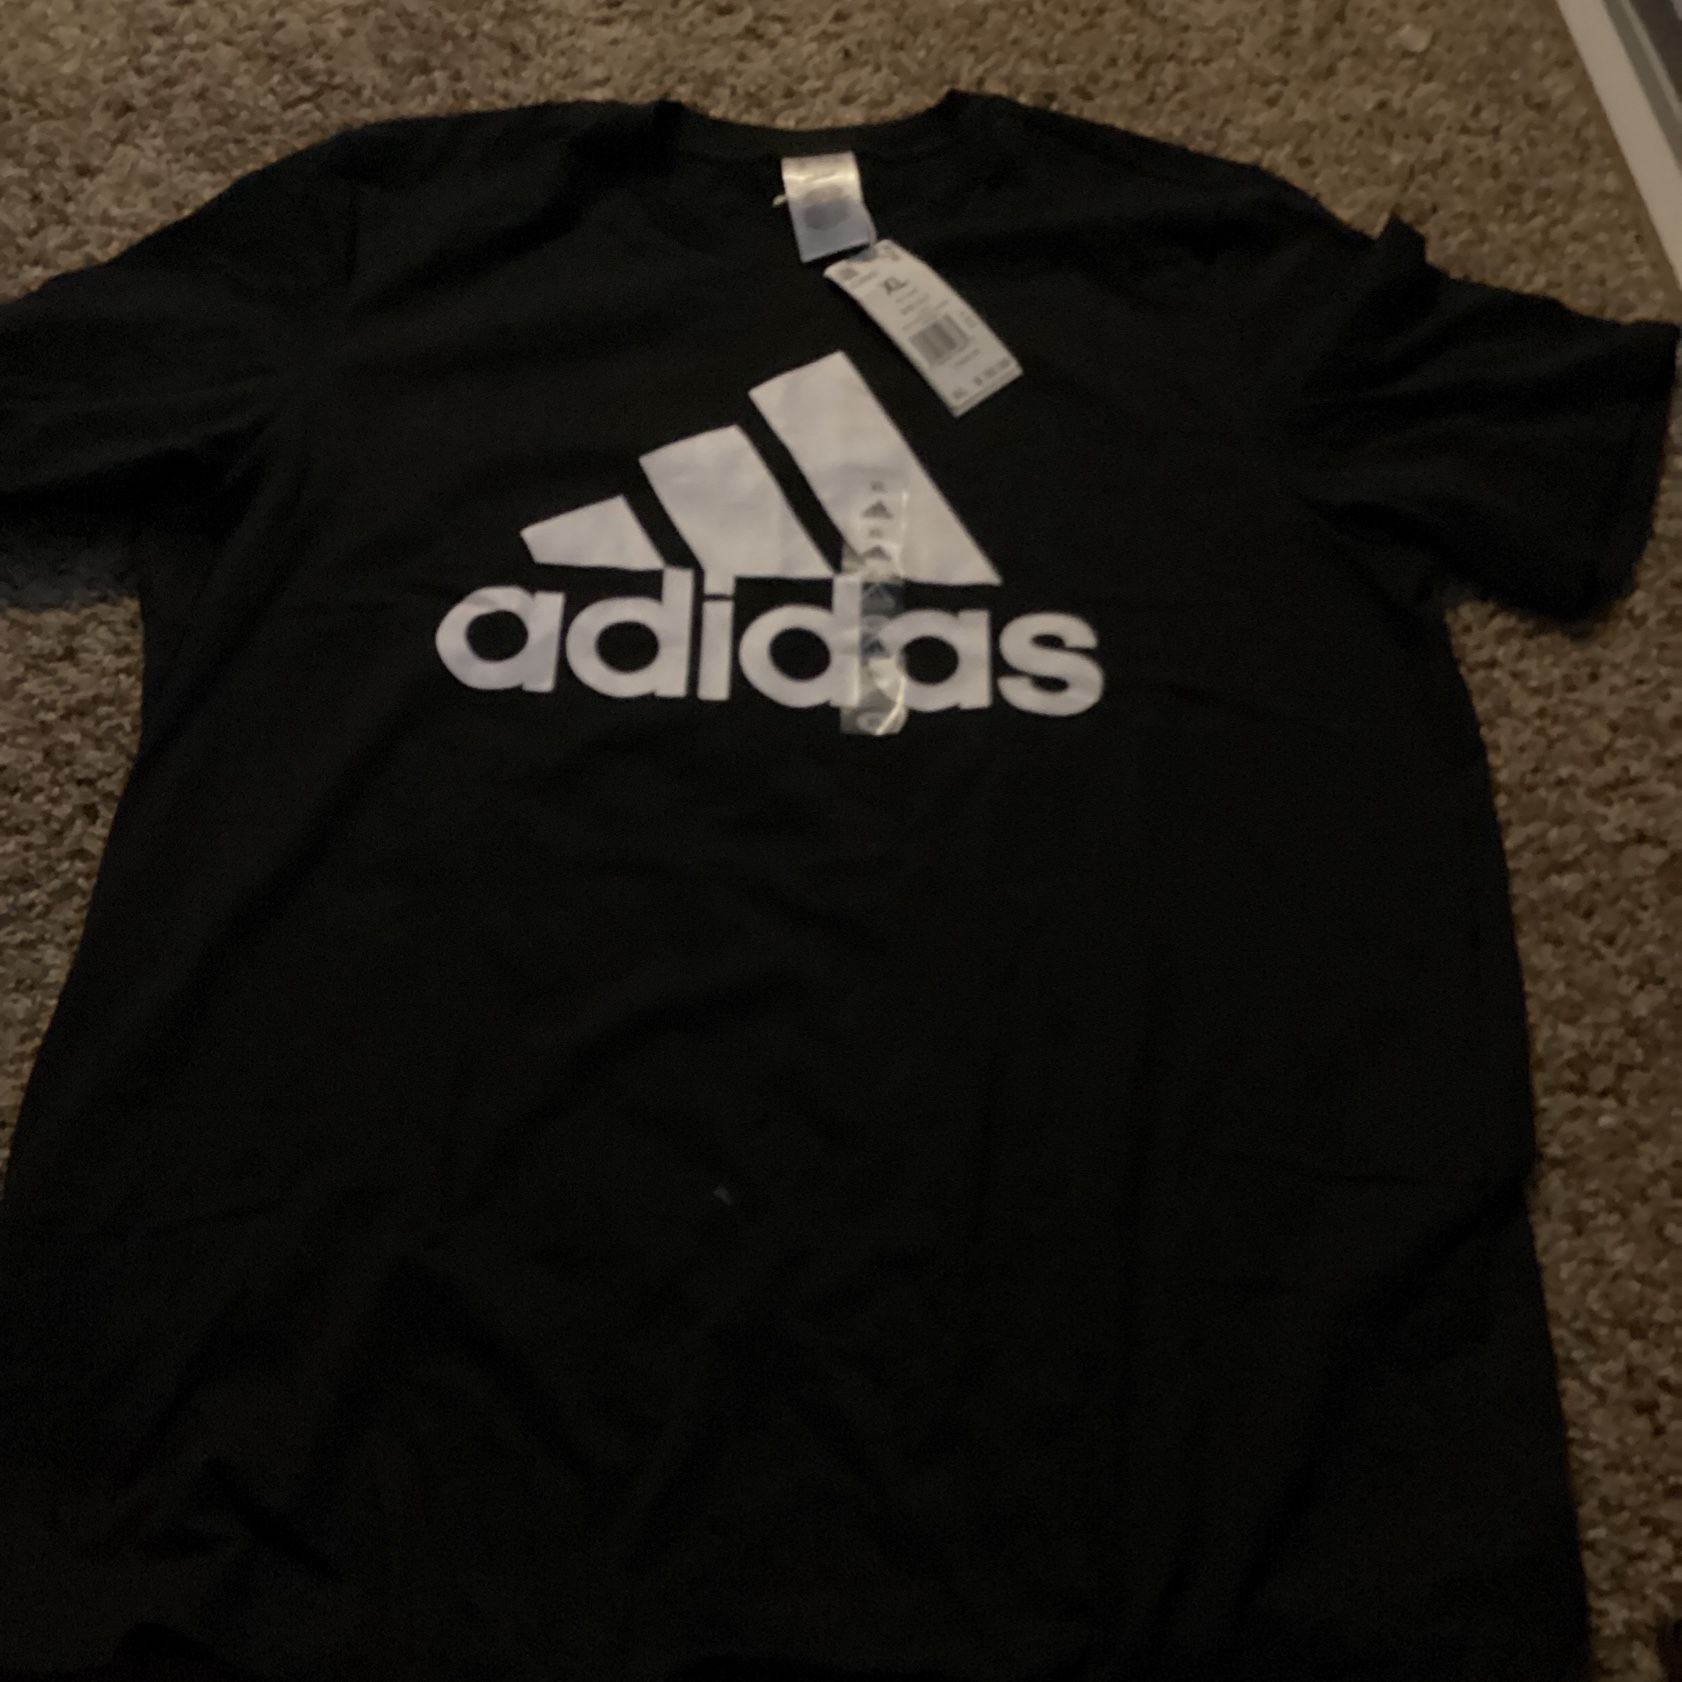 Adidas Men’s Shirt $15 Brand New !